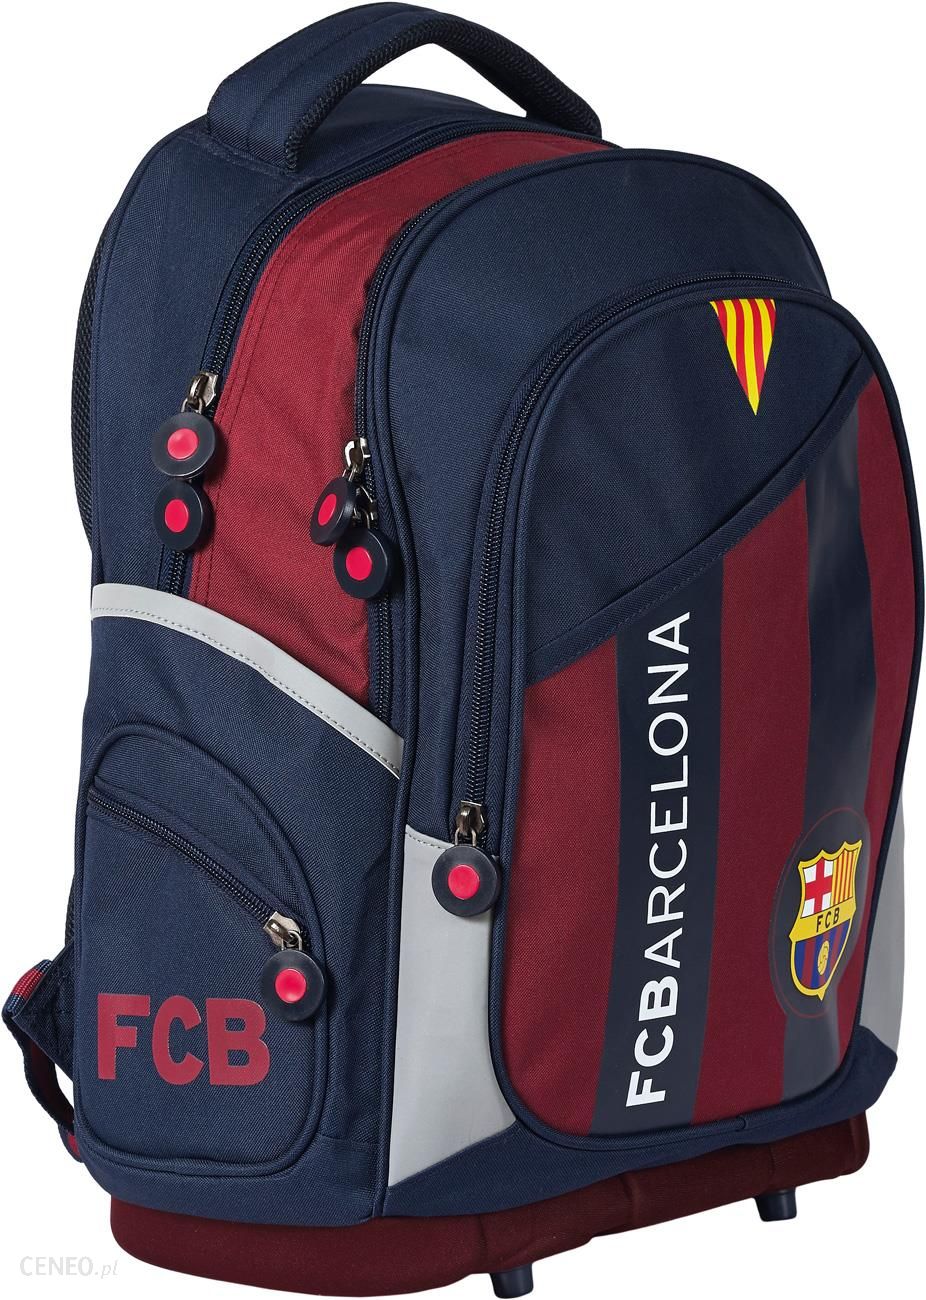 Astra Plecak szkolny FC-61 FC Barcelona Barca Fan 3 502015005